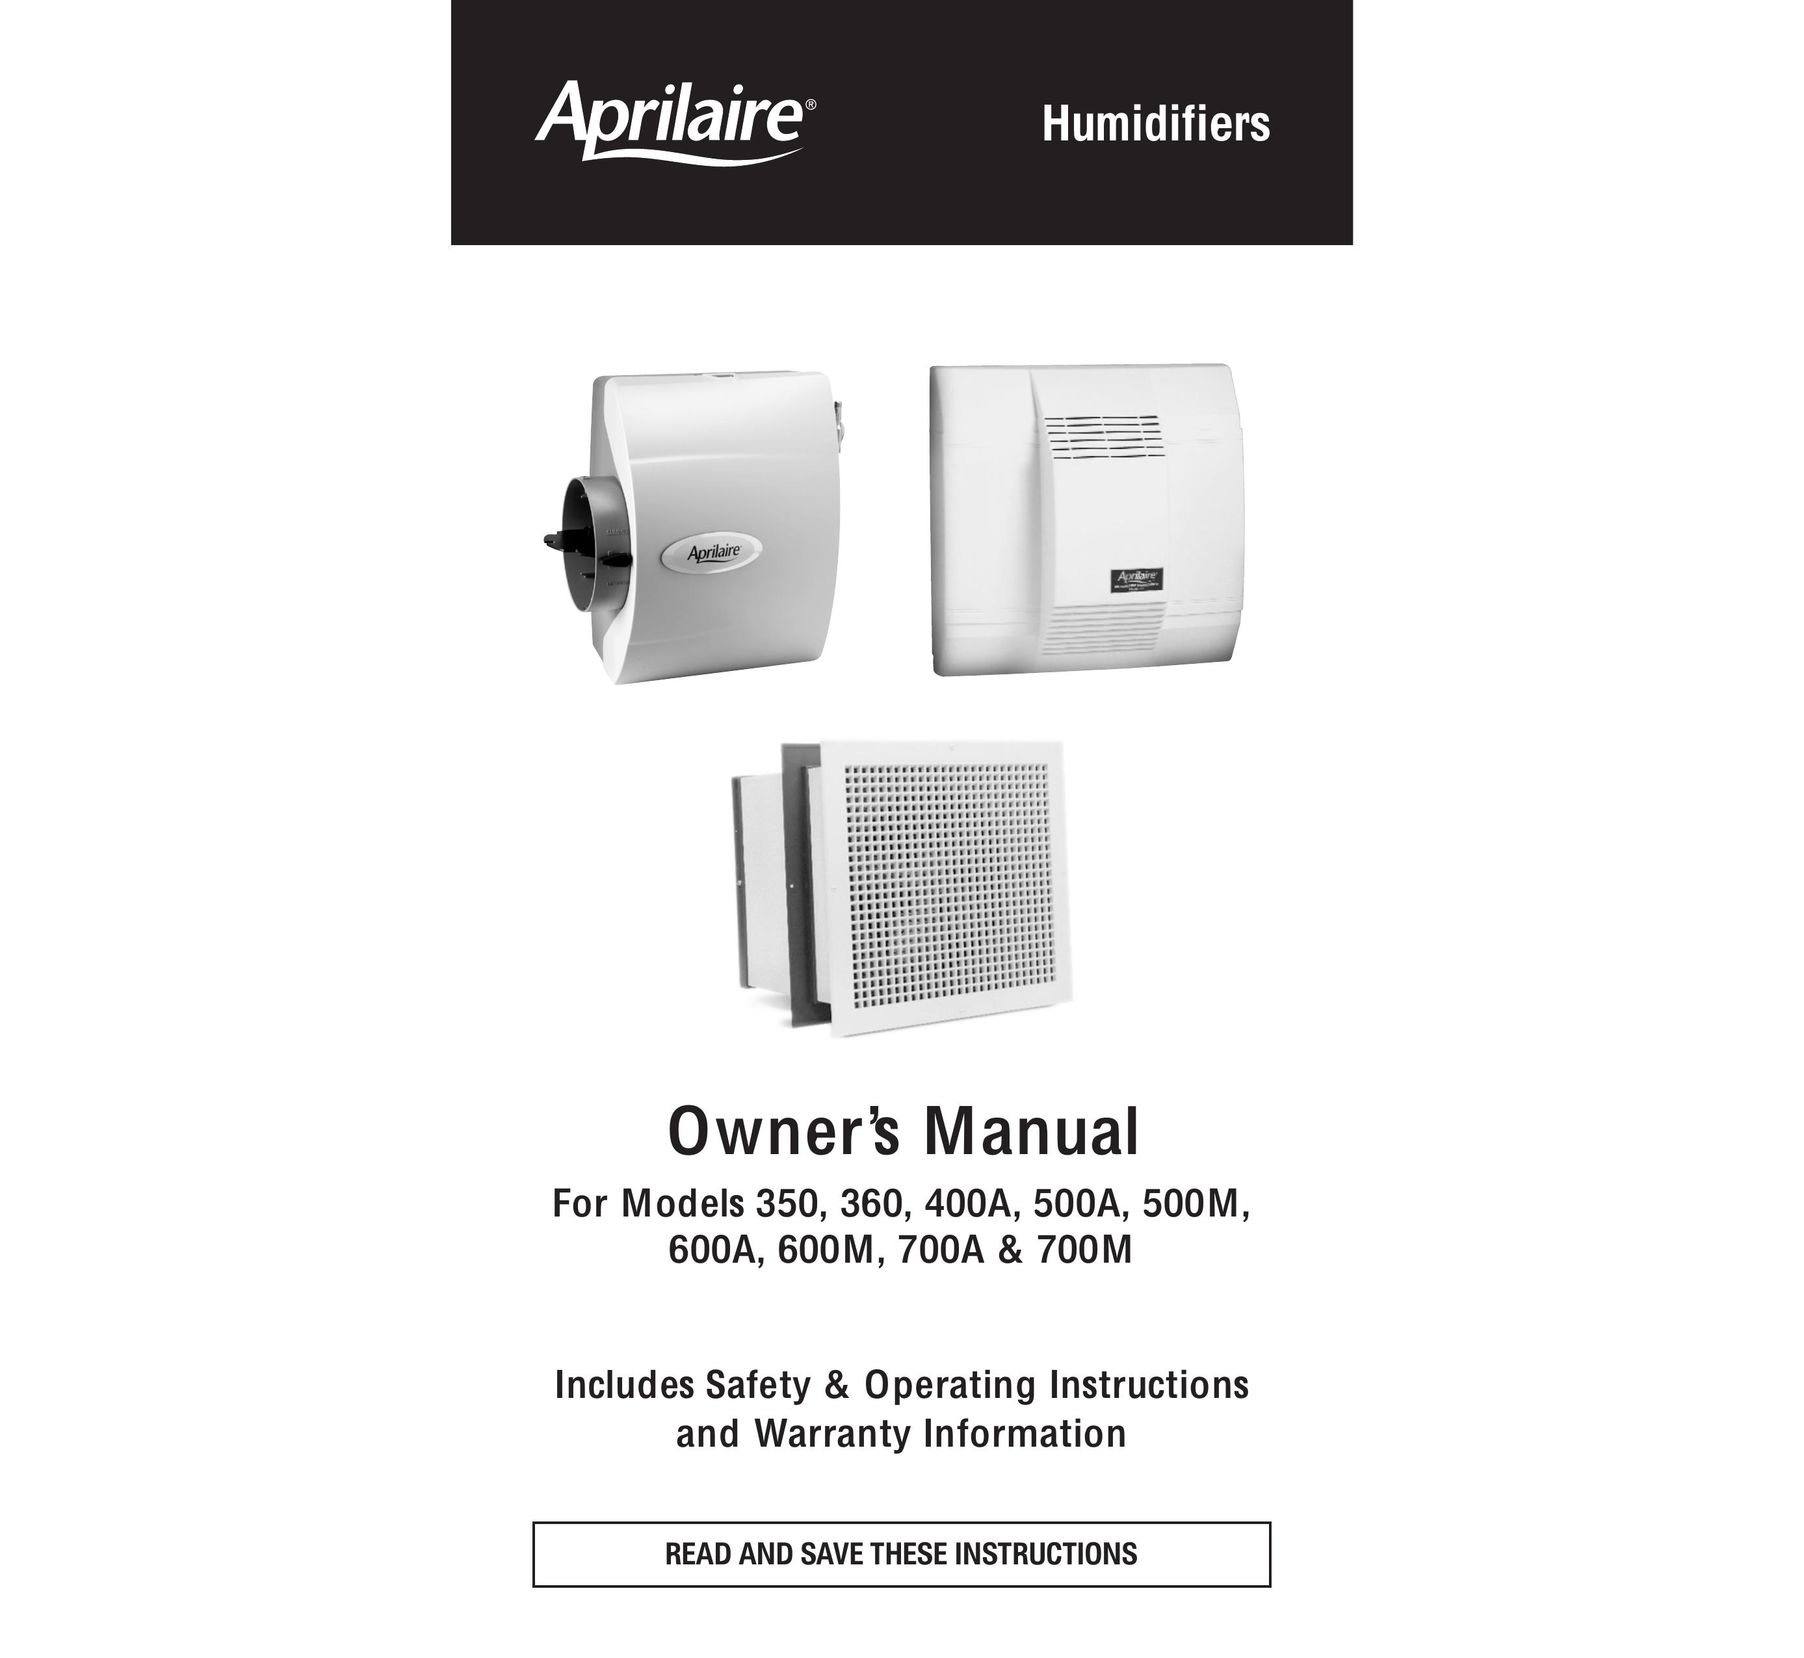 Aprilaire 600M Dehumidifier User Manual